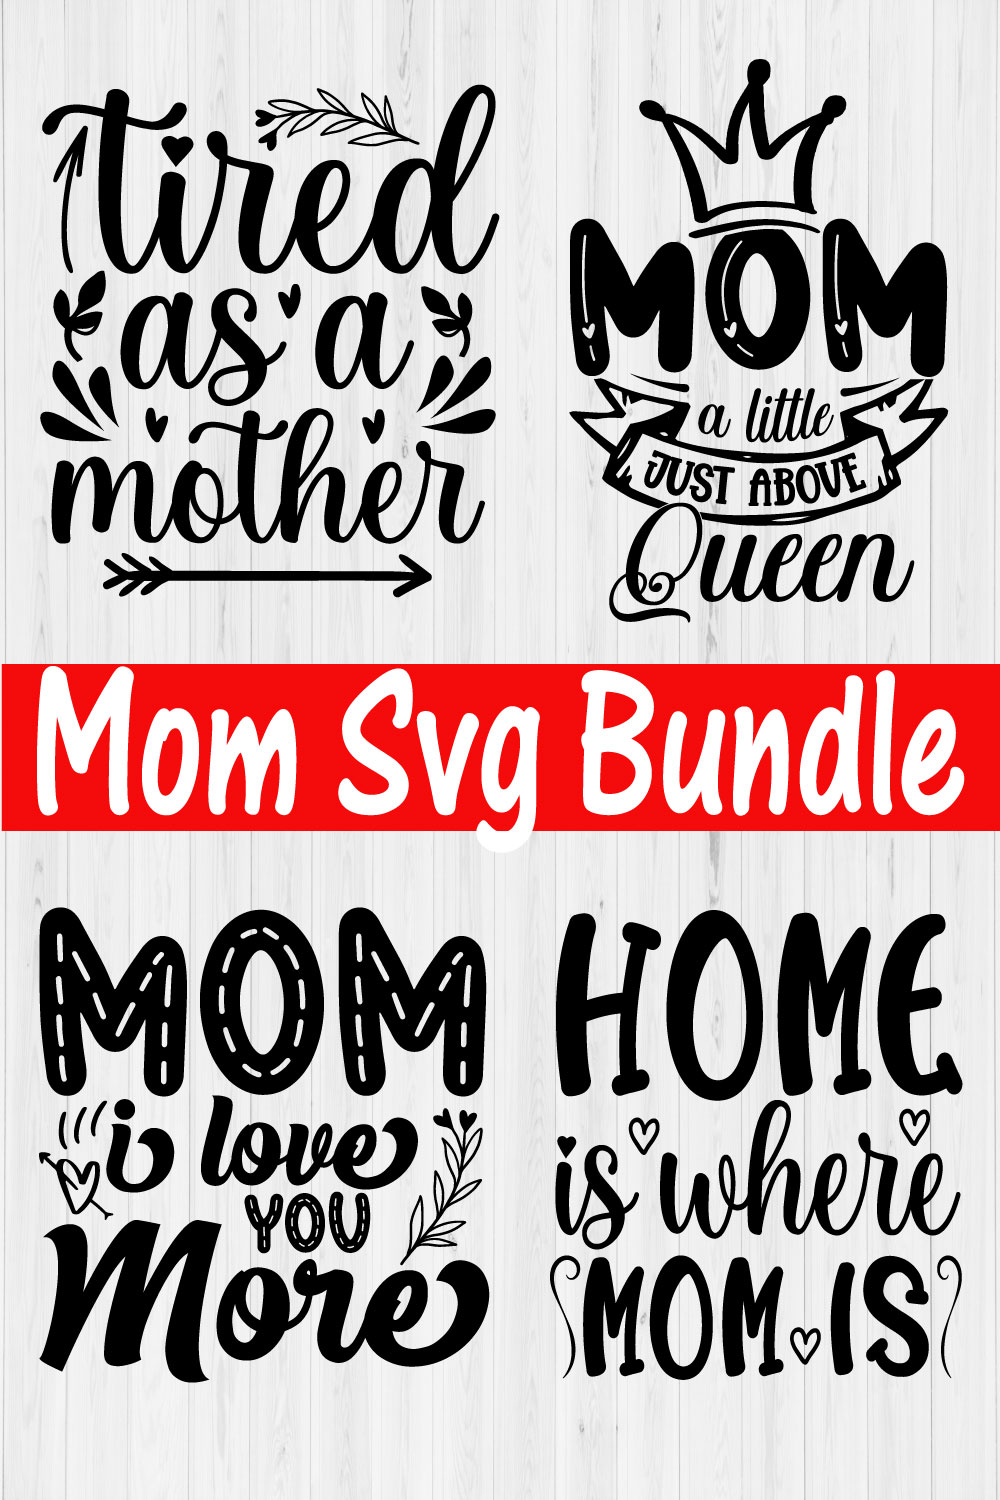 Mom Svg Typography Design Vol17 pinterest preview image.